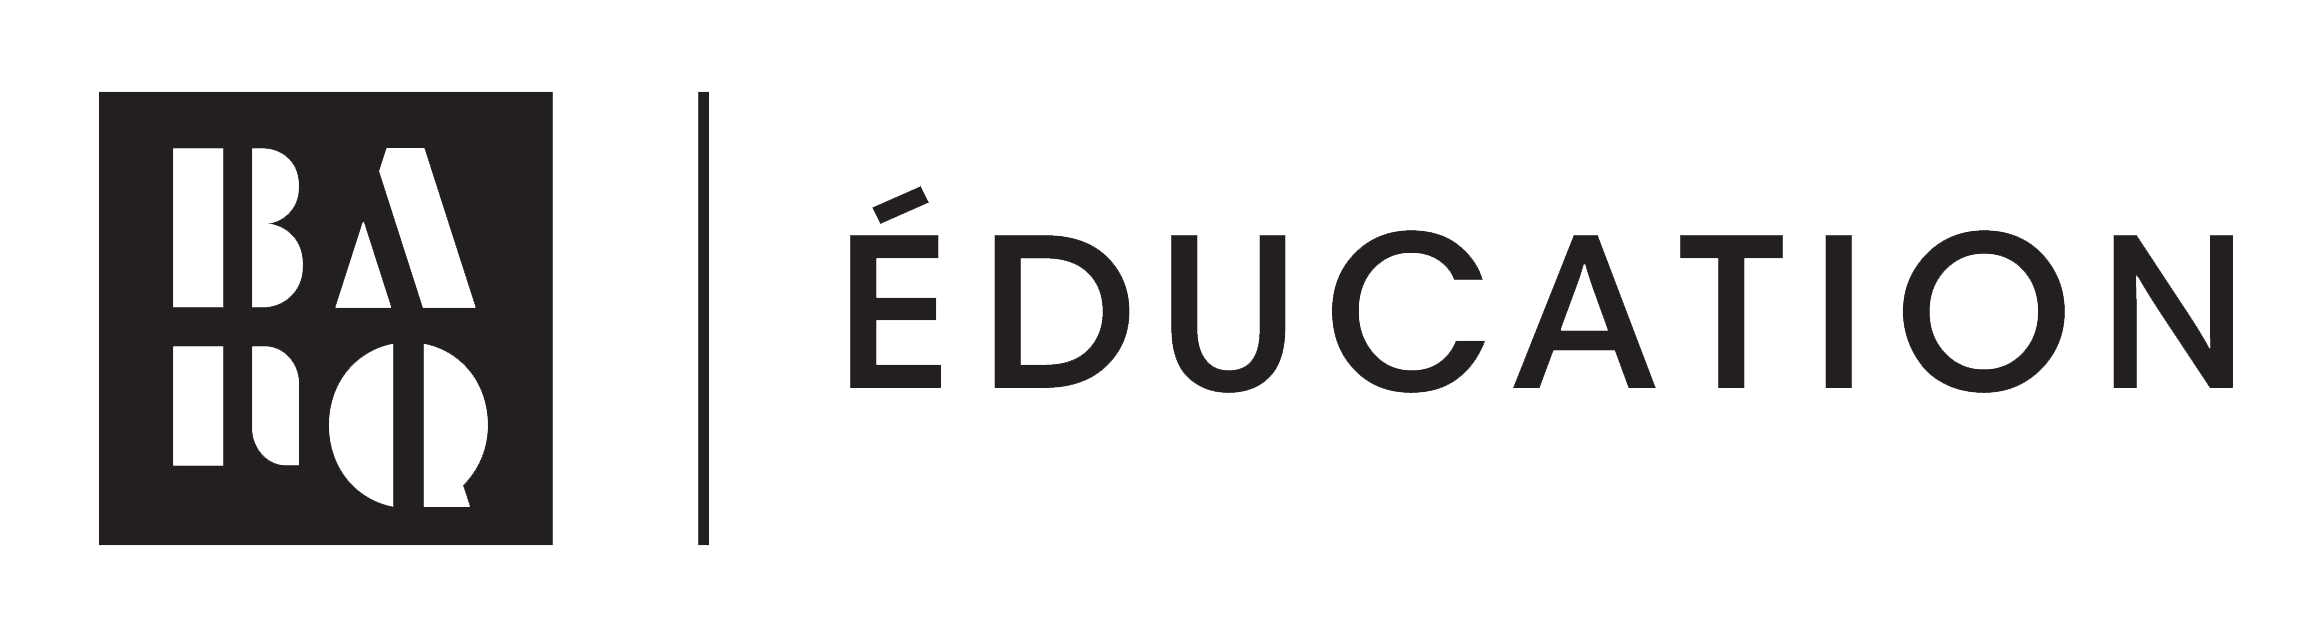 Logo banq education